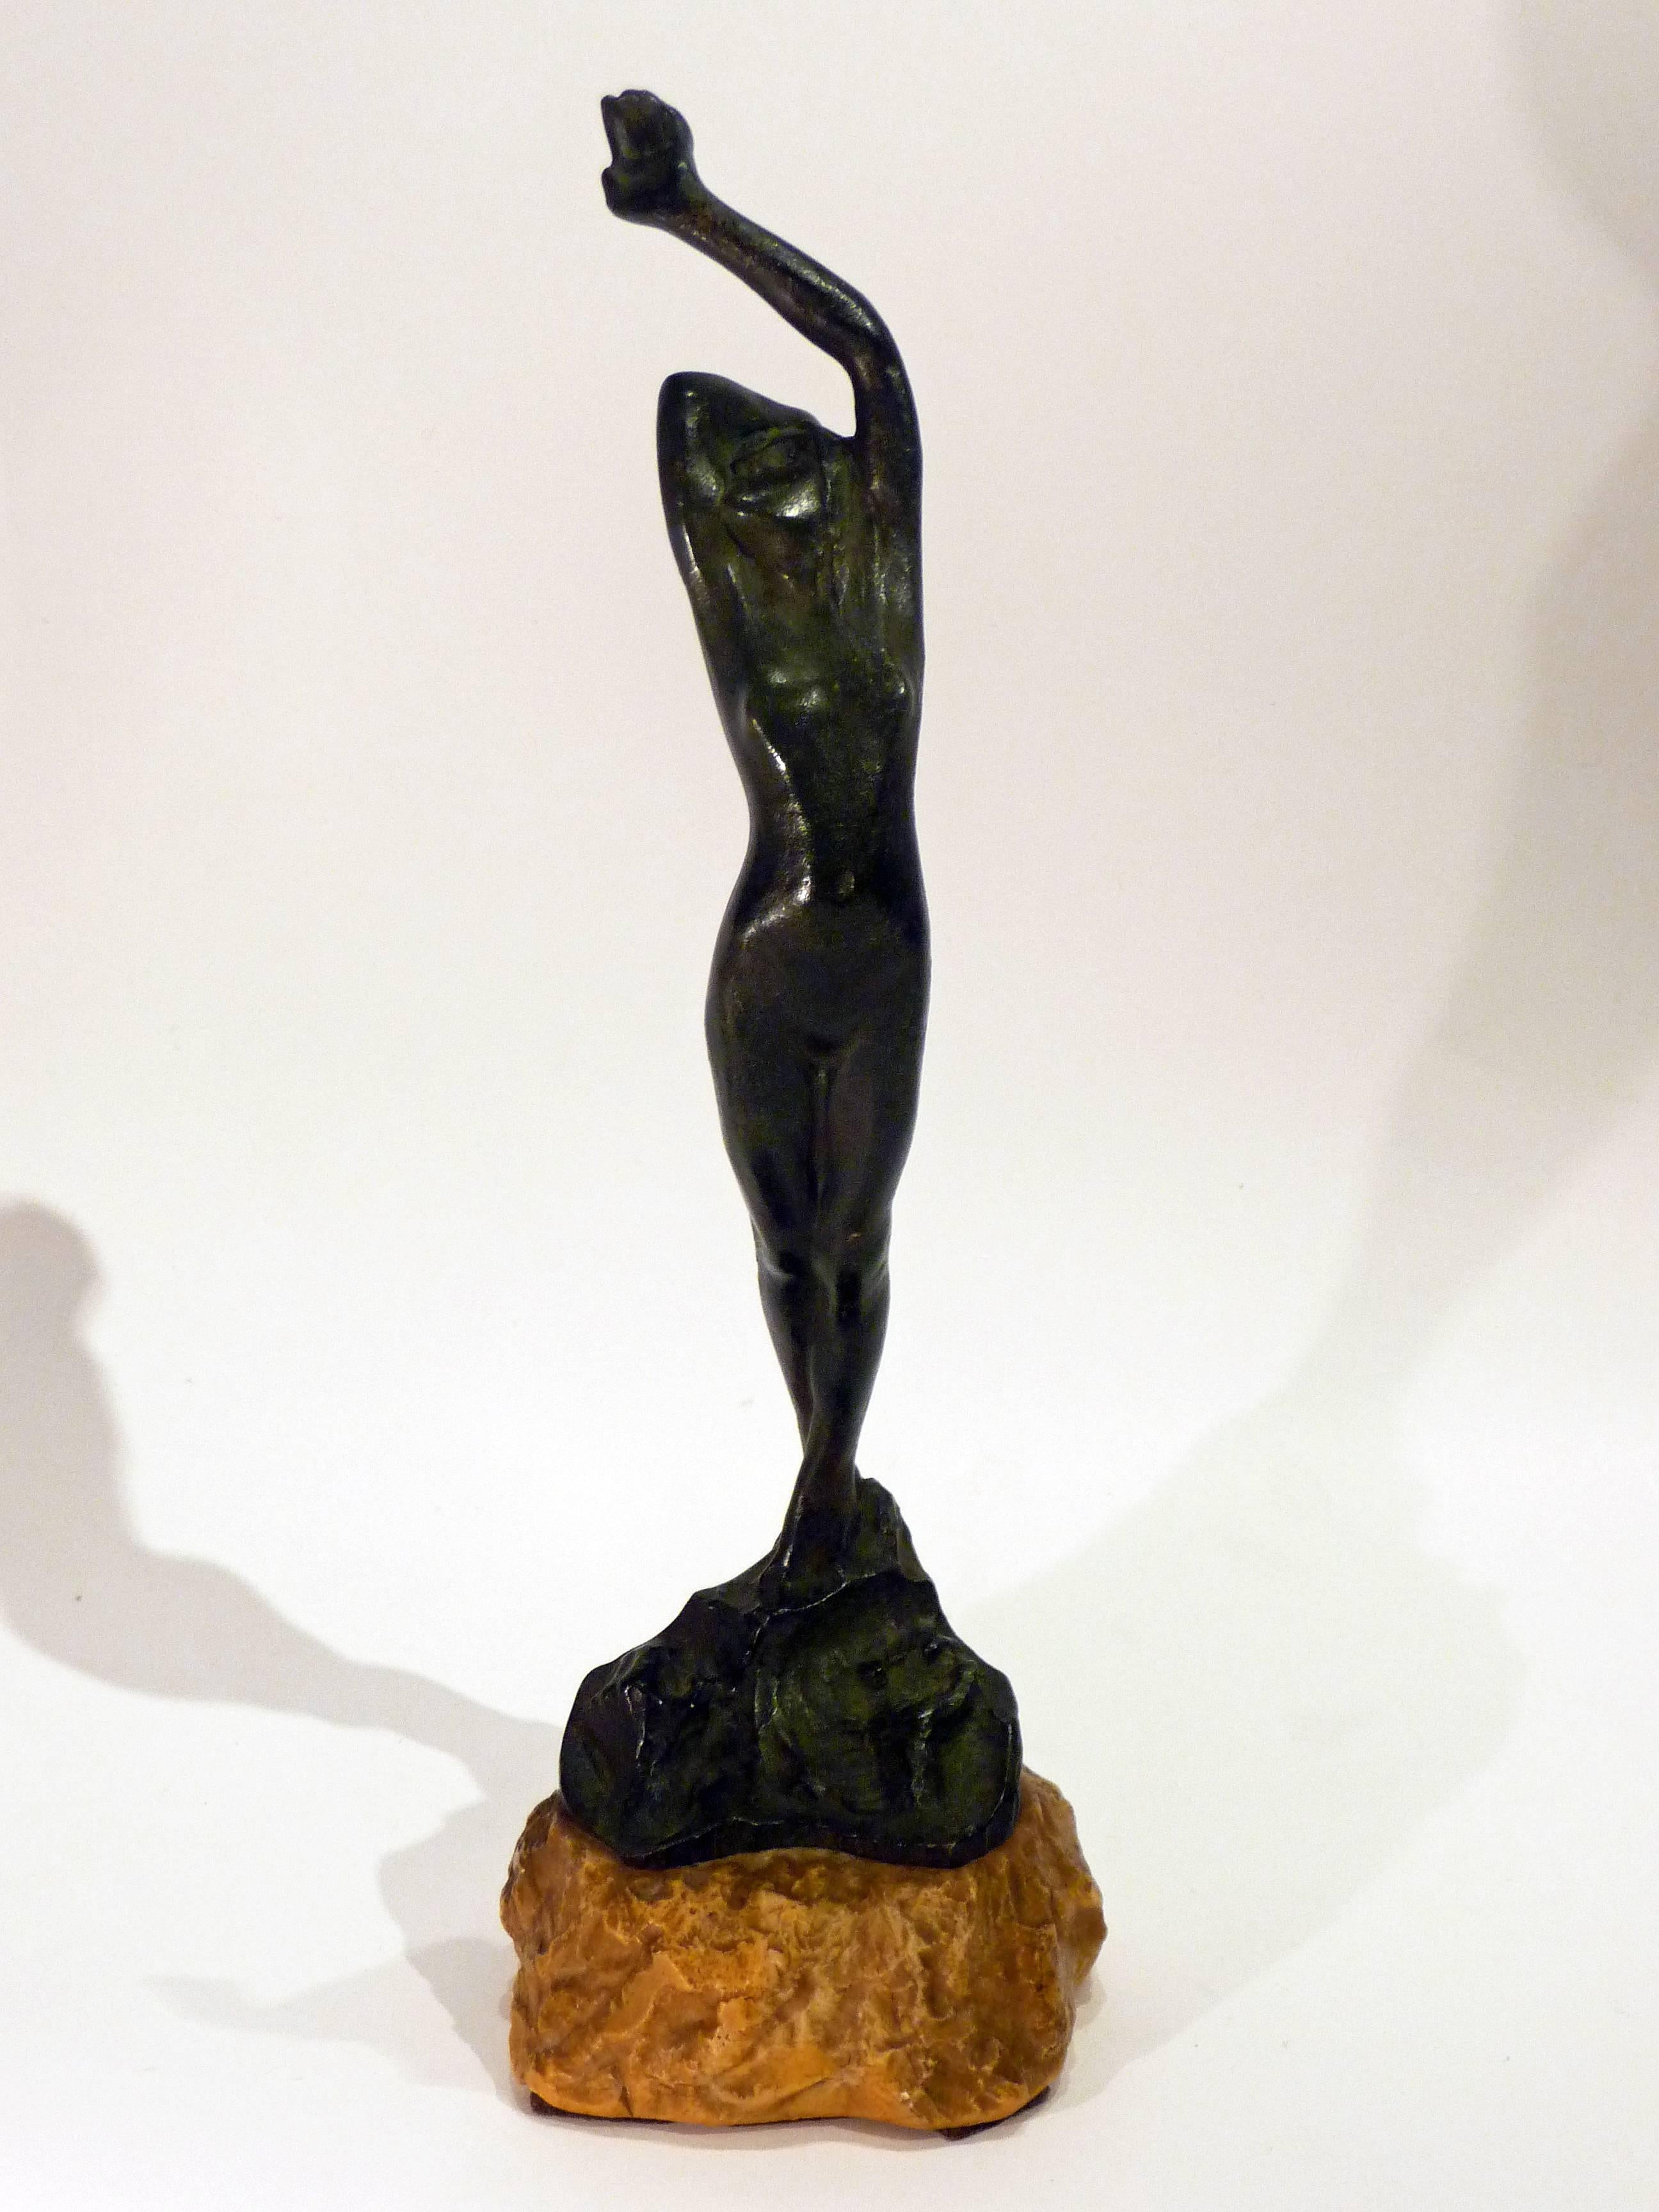 Harald Sorensen-Ringi.
"Awakening".
A bronze sculpture.
Signed, with foundry mark CL.
 